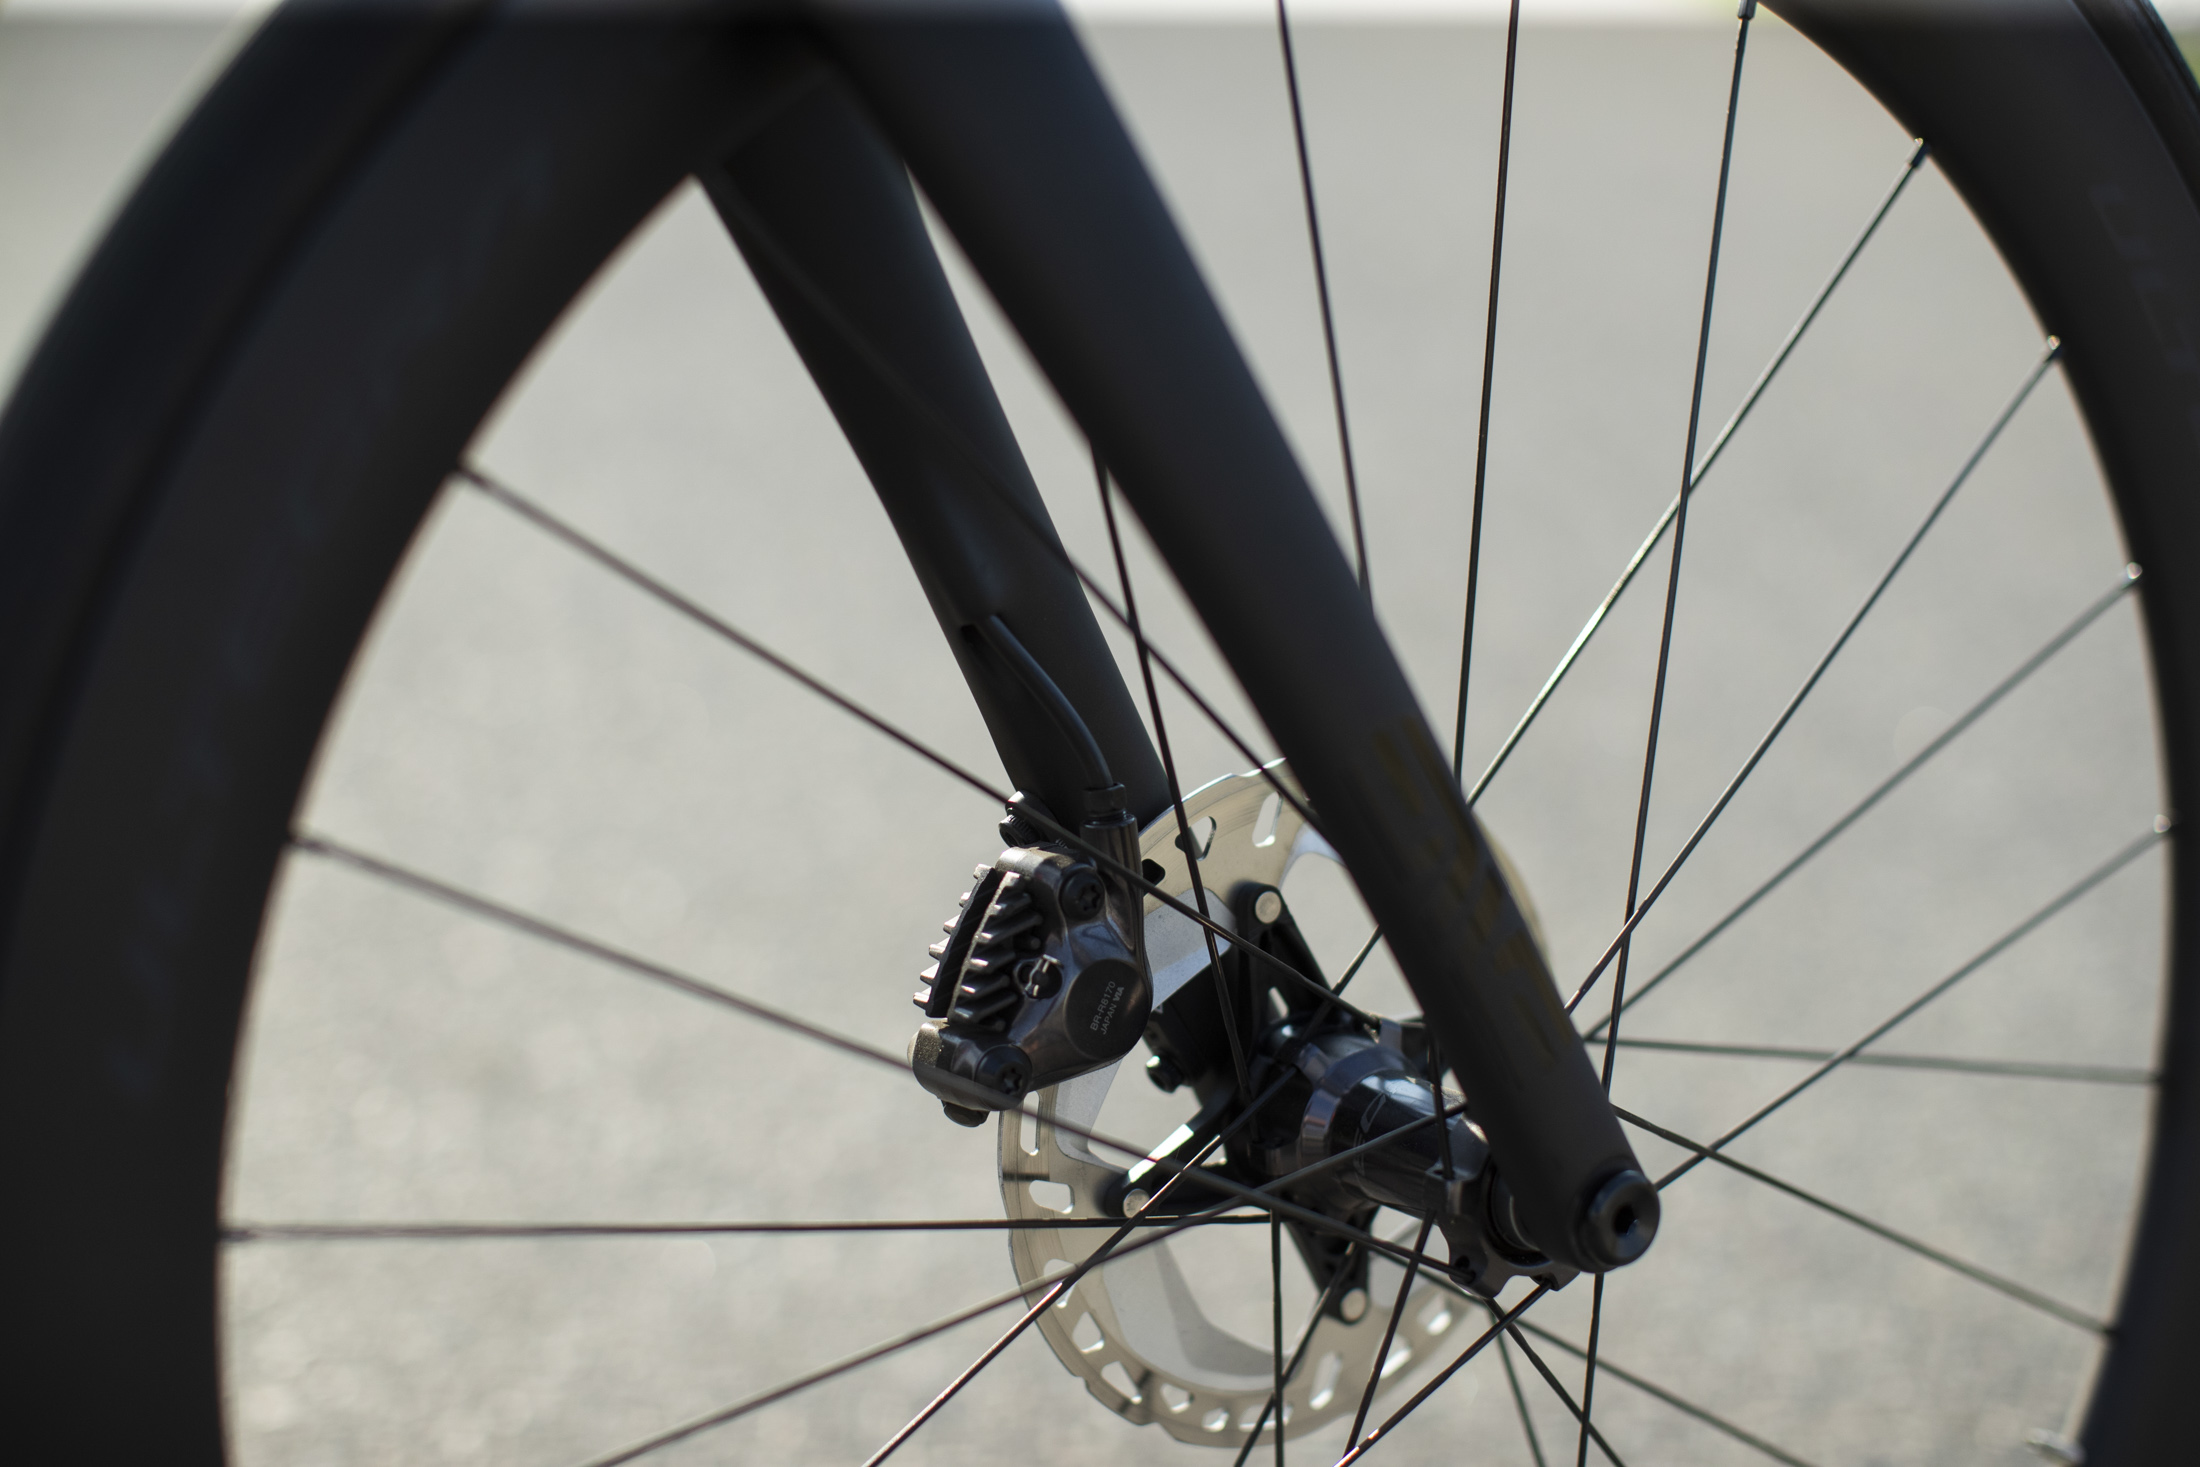 Shimano Carbon road bike wheels